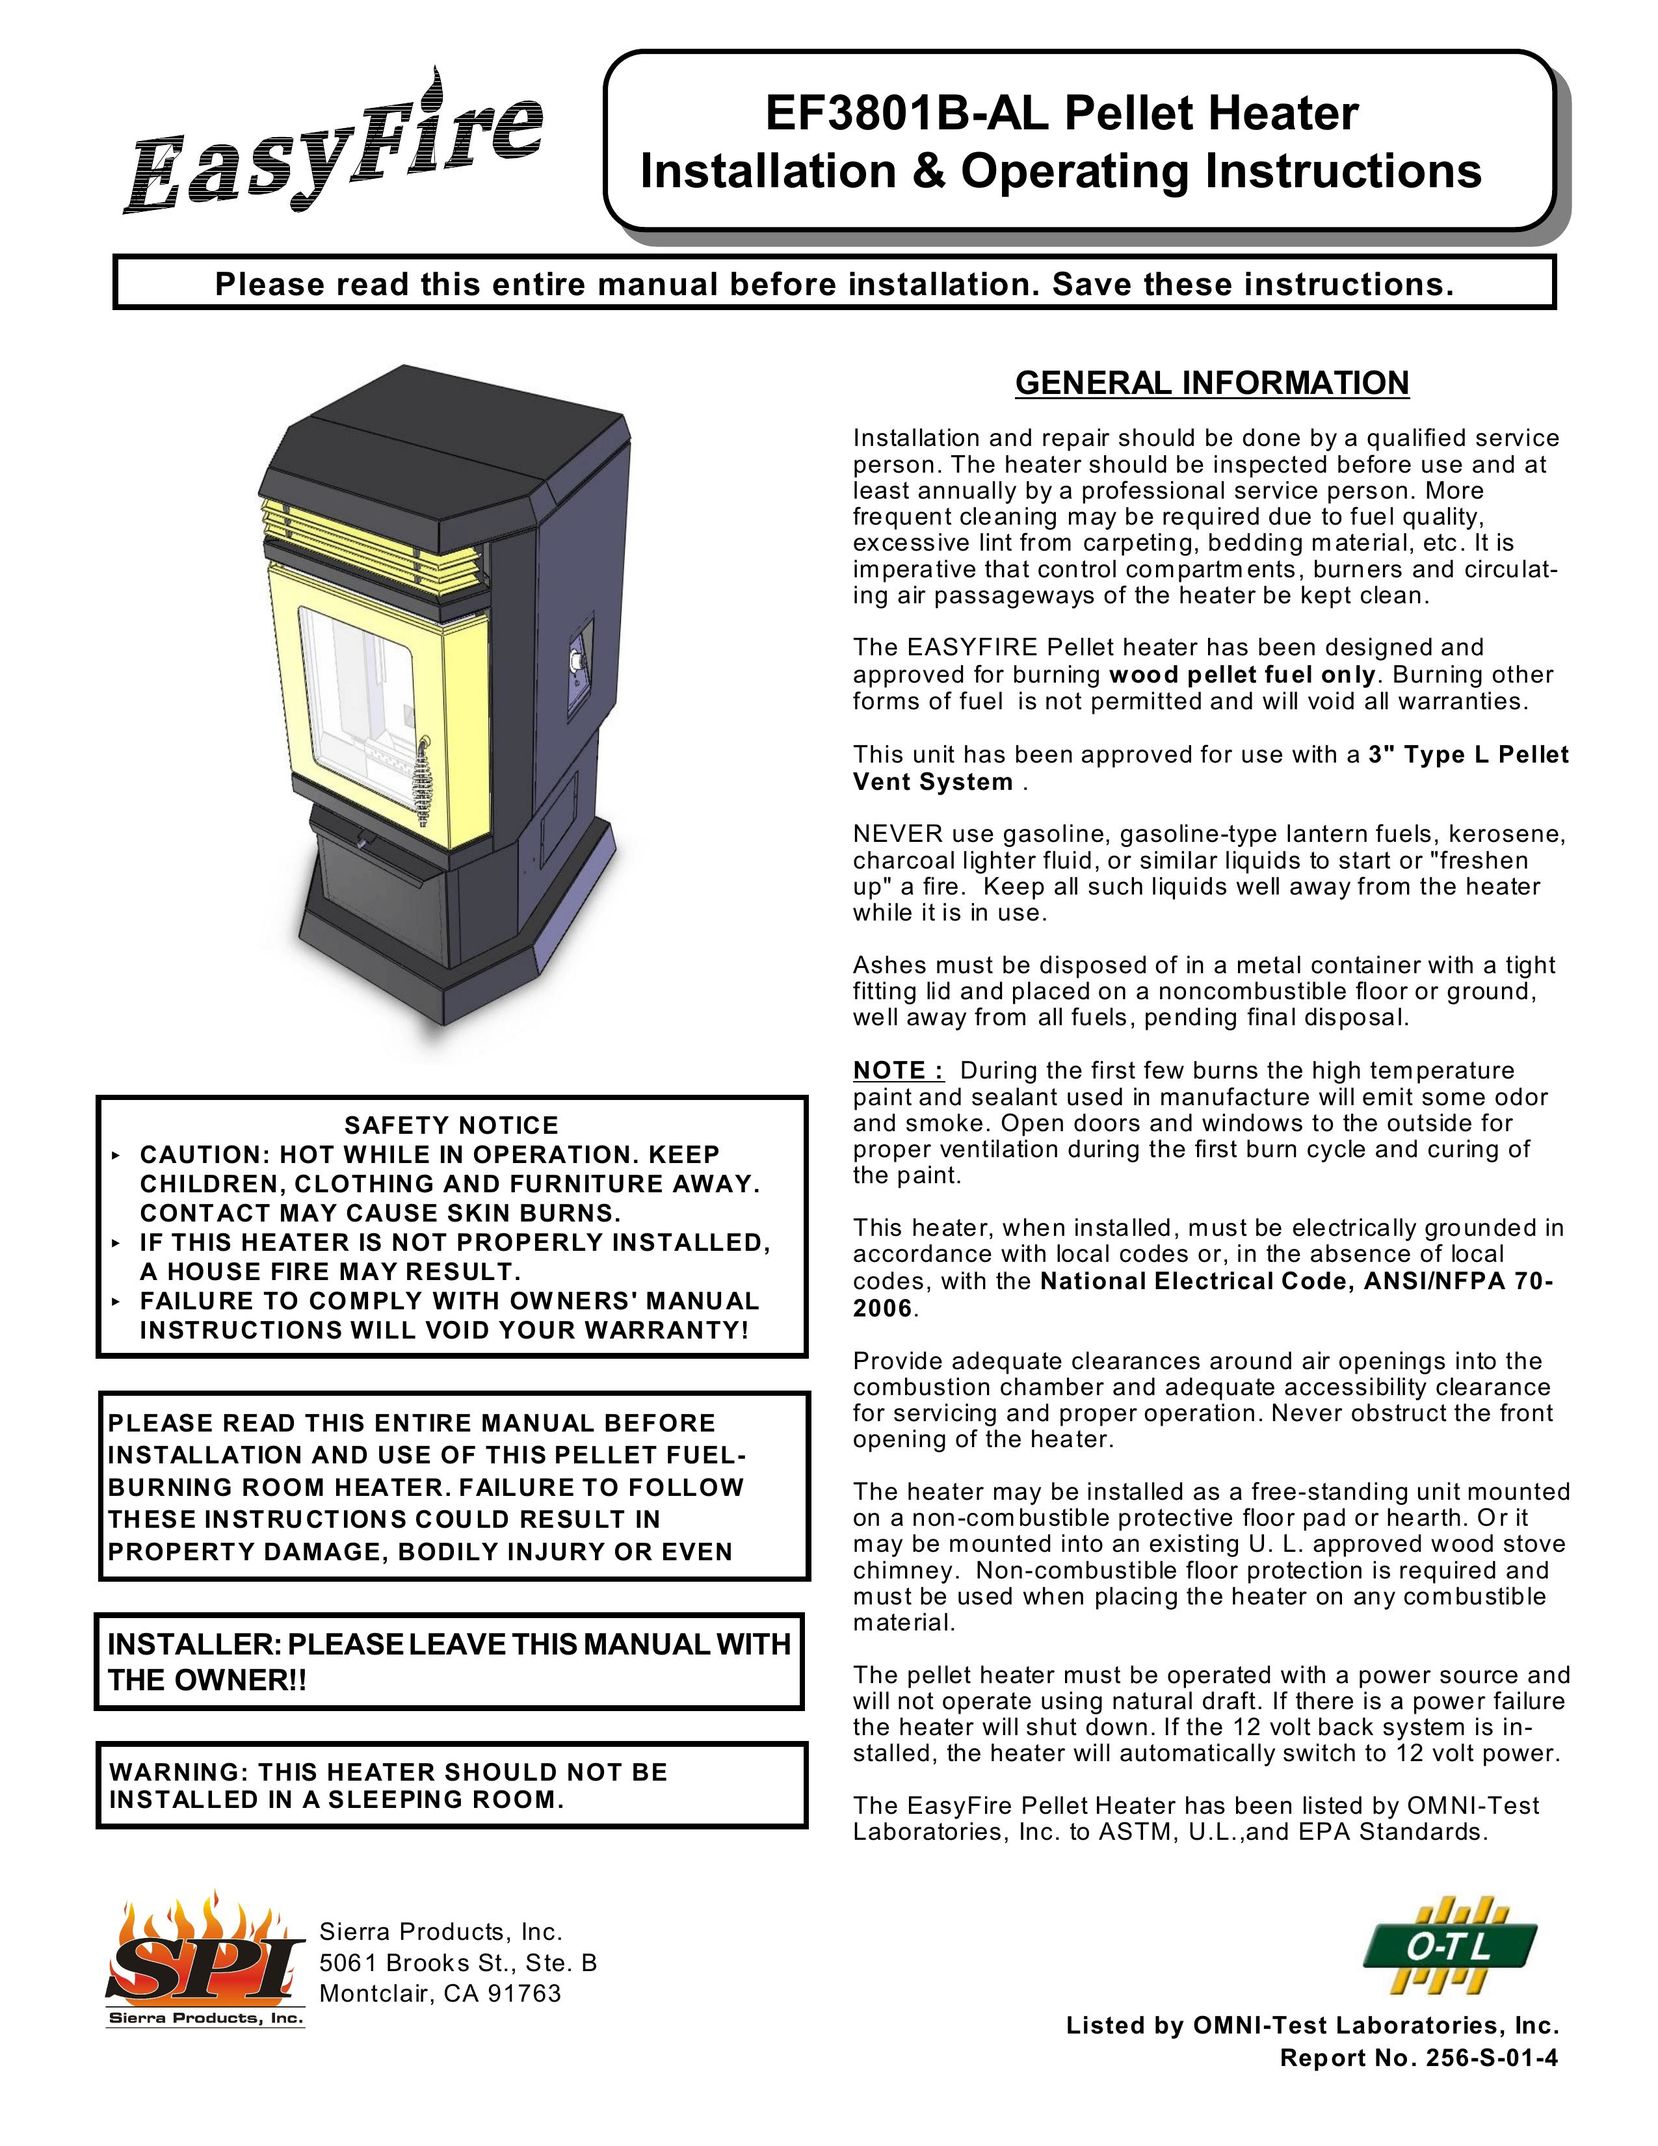 Sierra Products EF-3801B-AL Electric Heater User Manual